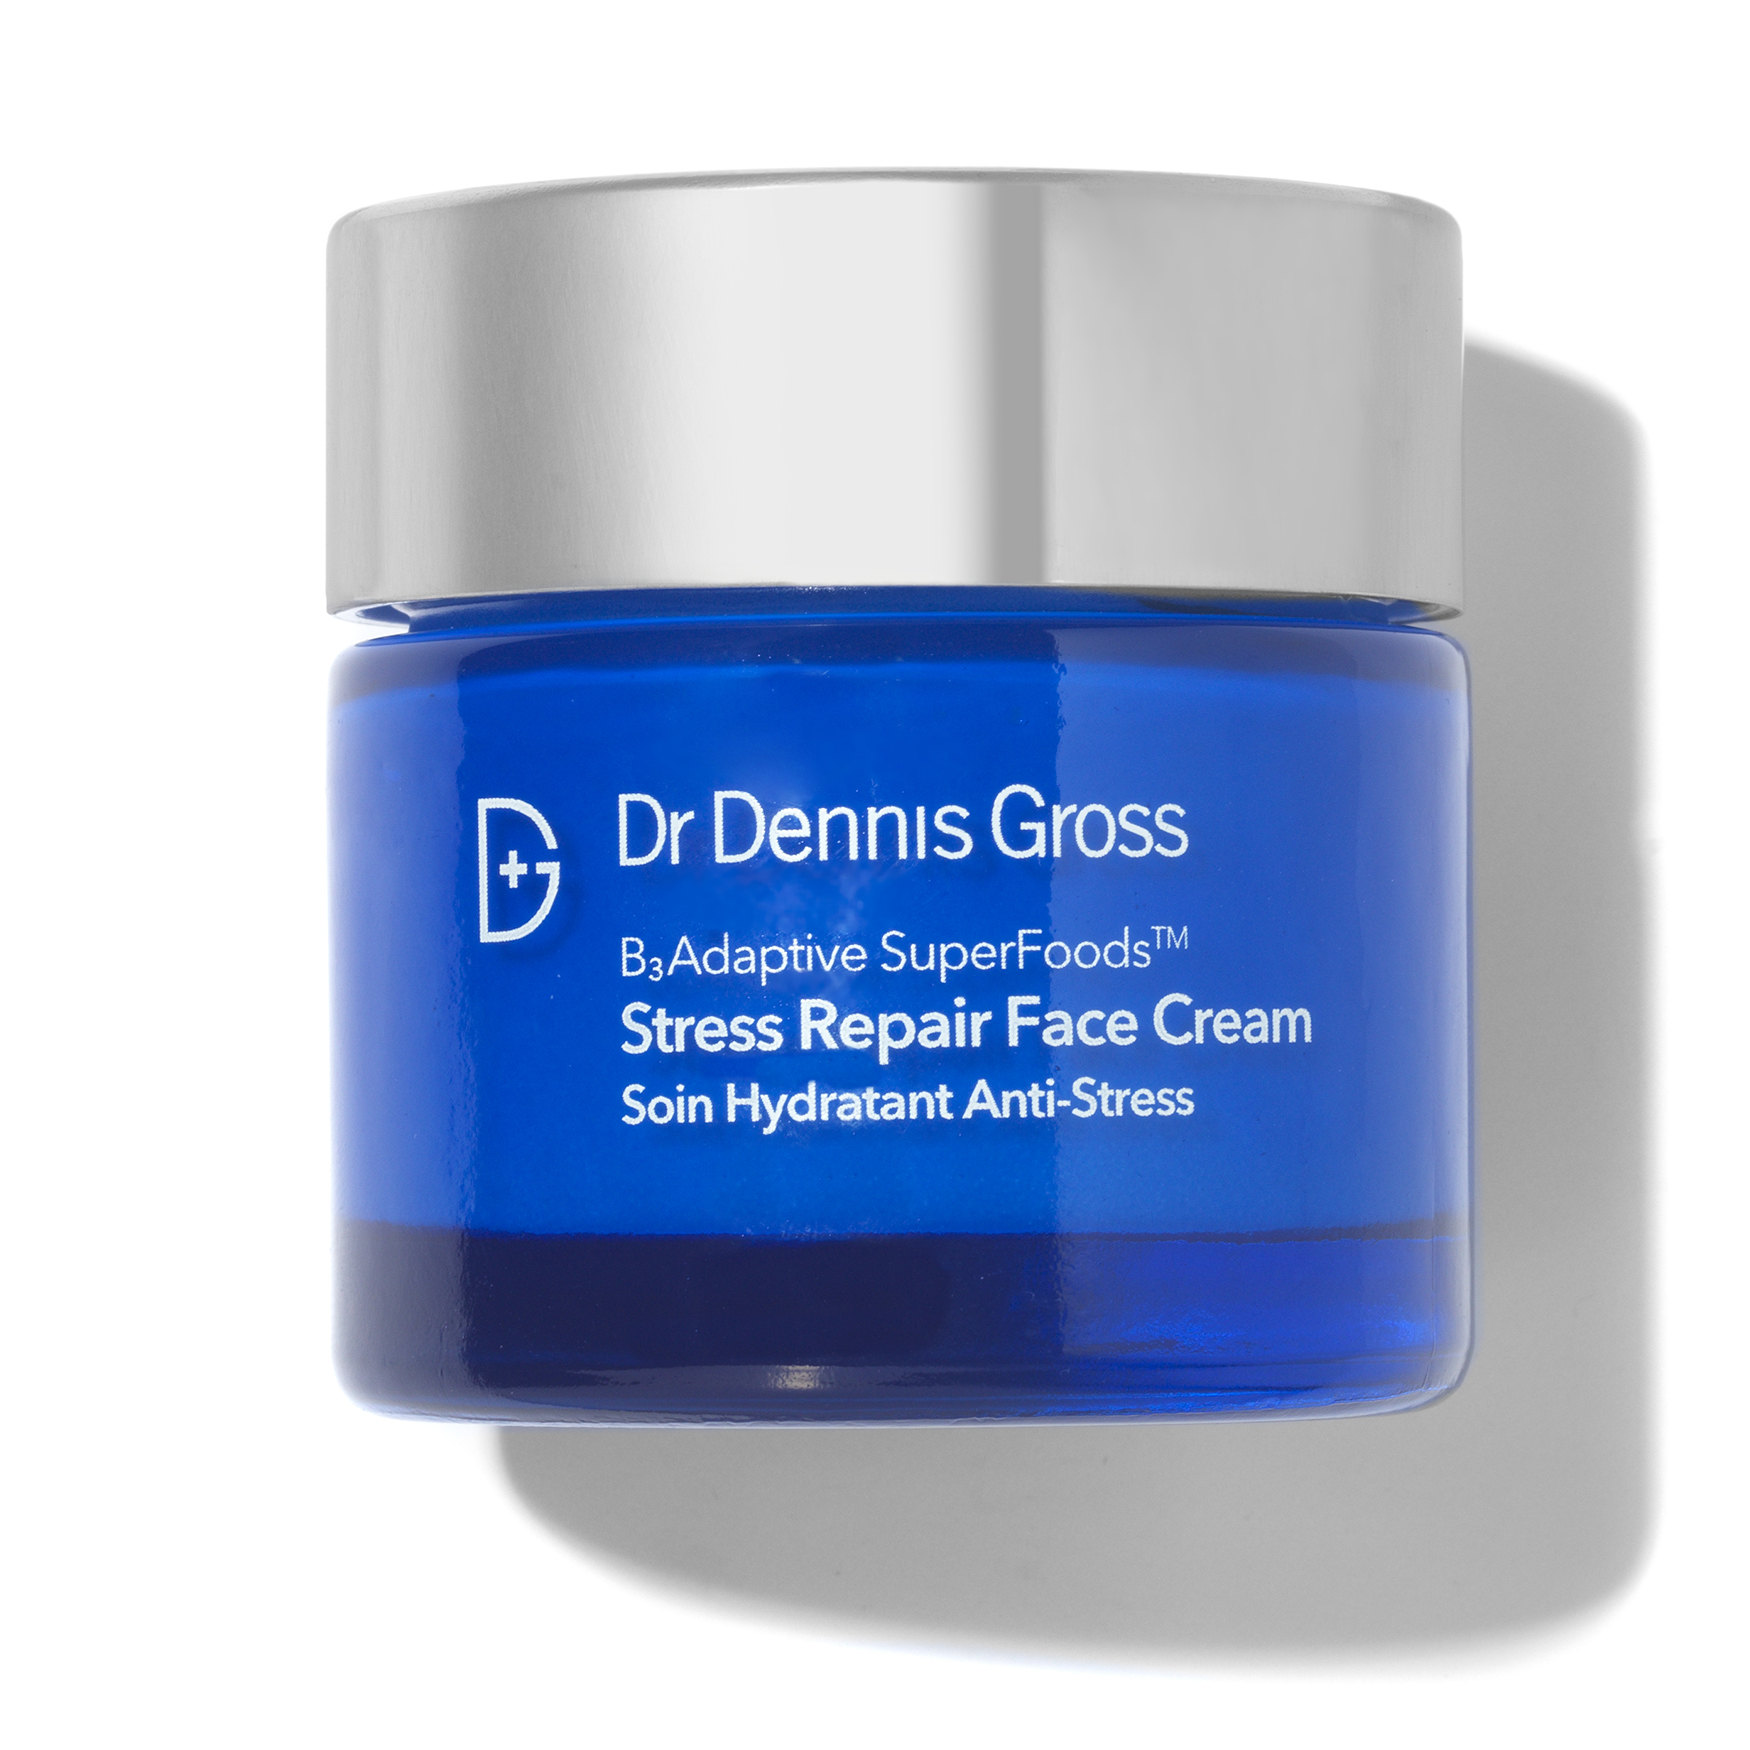 Dr. Dennis Gross B3 Adaptive SuperFoods Stress Repair Face Cream | Space NK